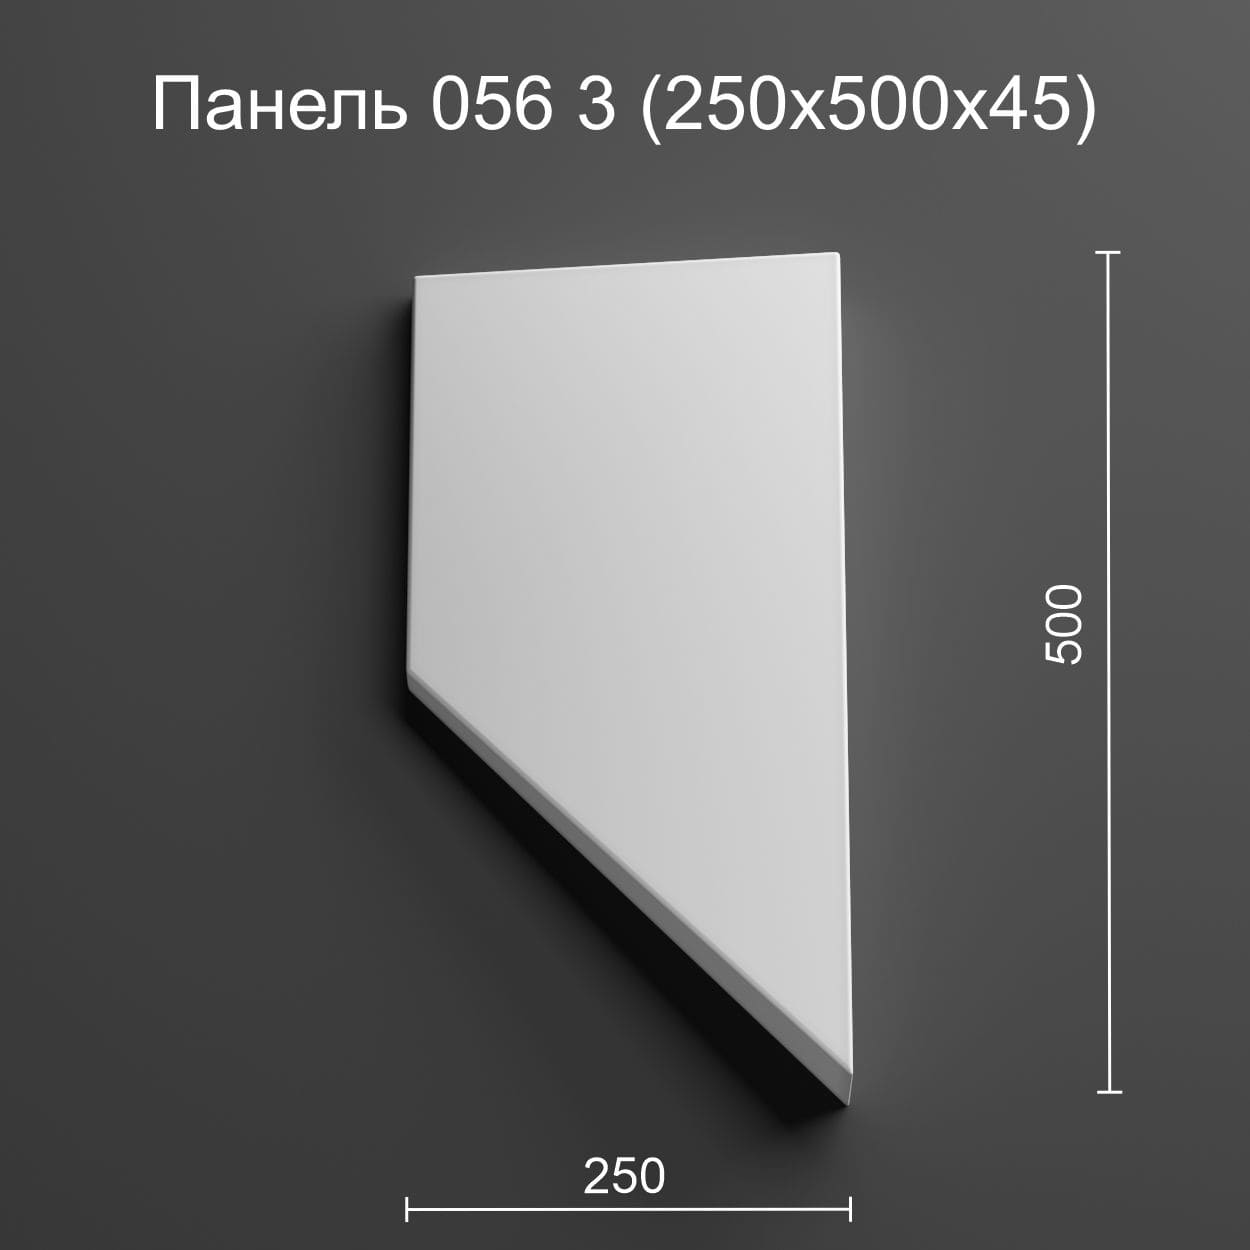 3д панель Геометрия 056 3